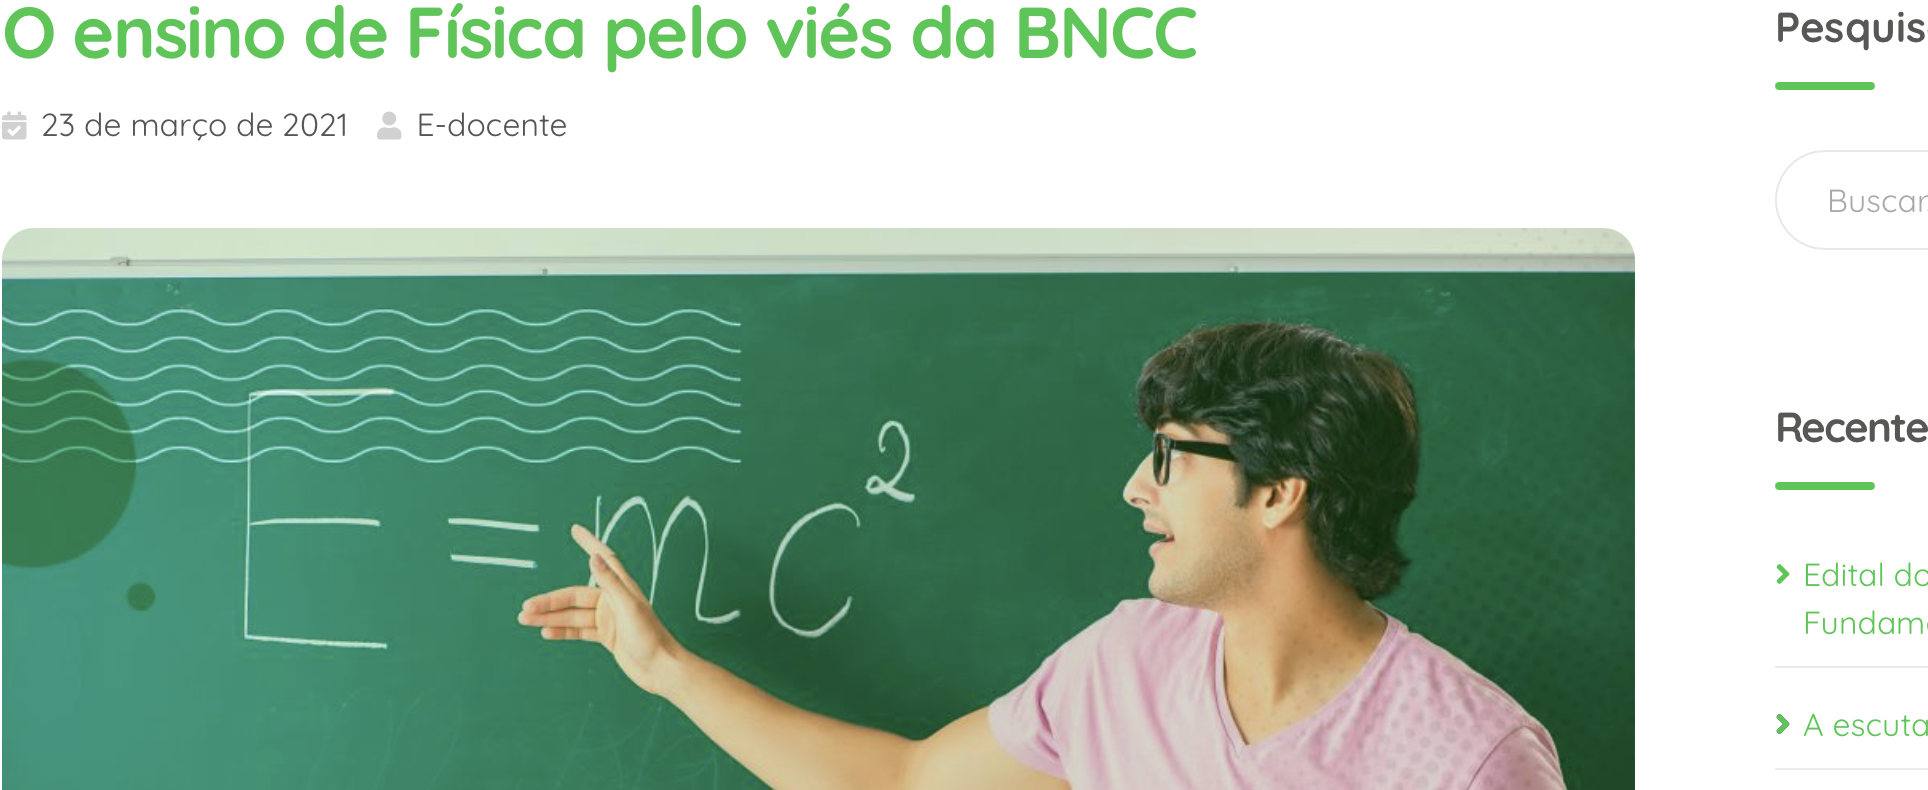 BNCC, Física